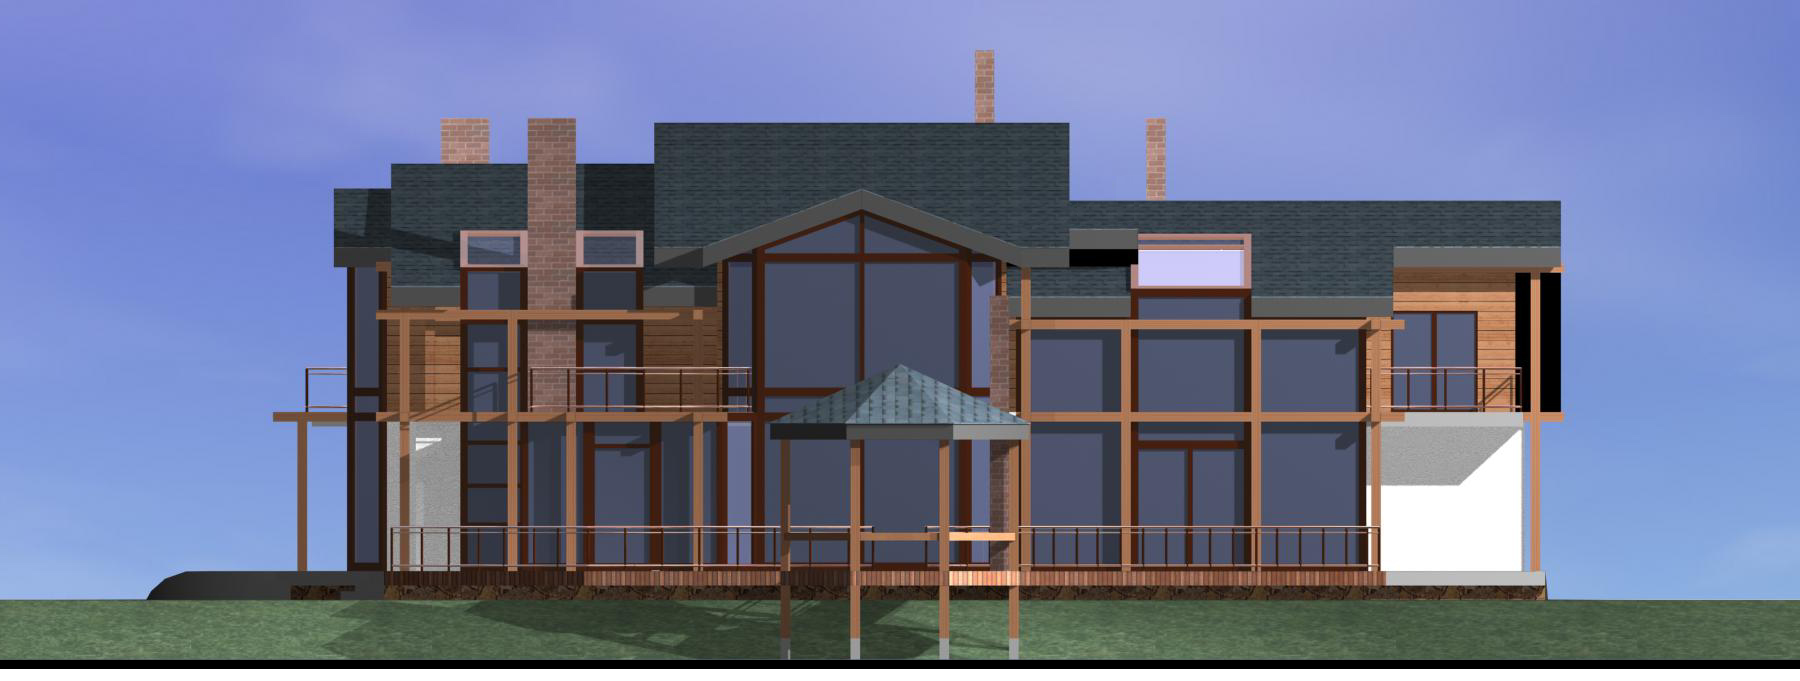 Проект загородного дома(визуализация)развёртка 2